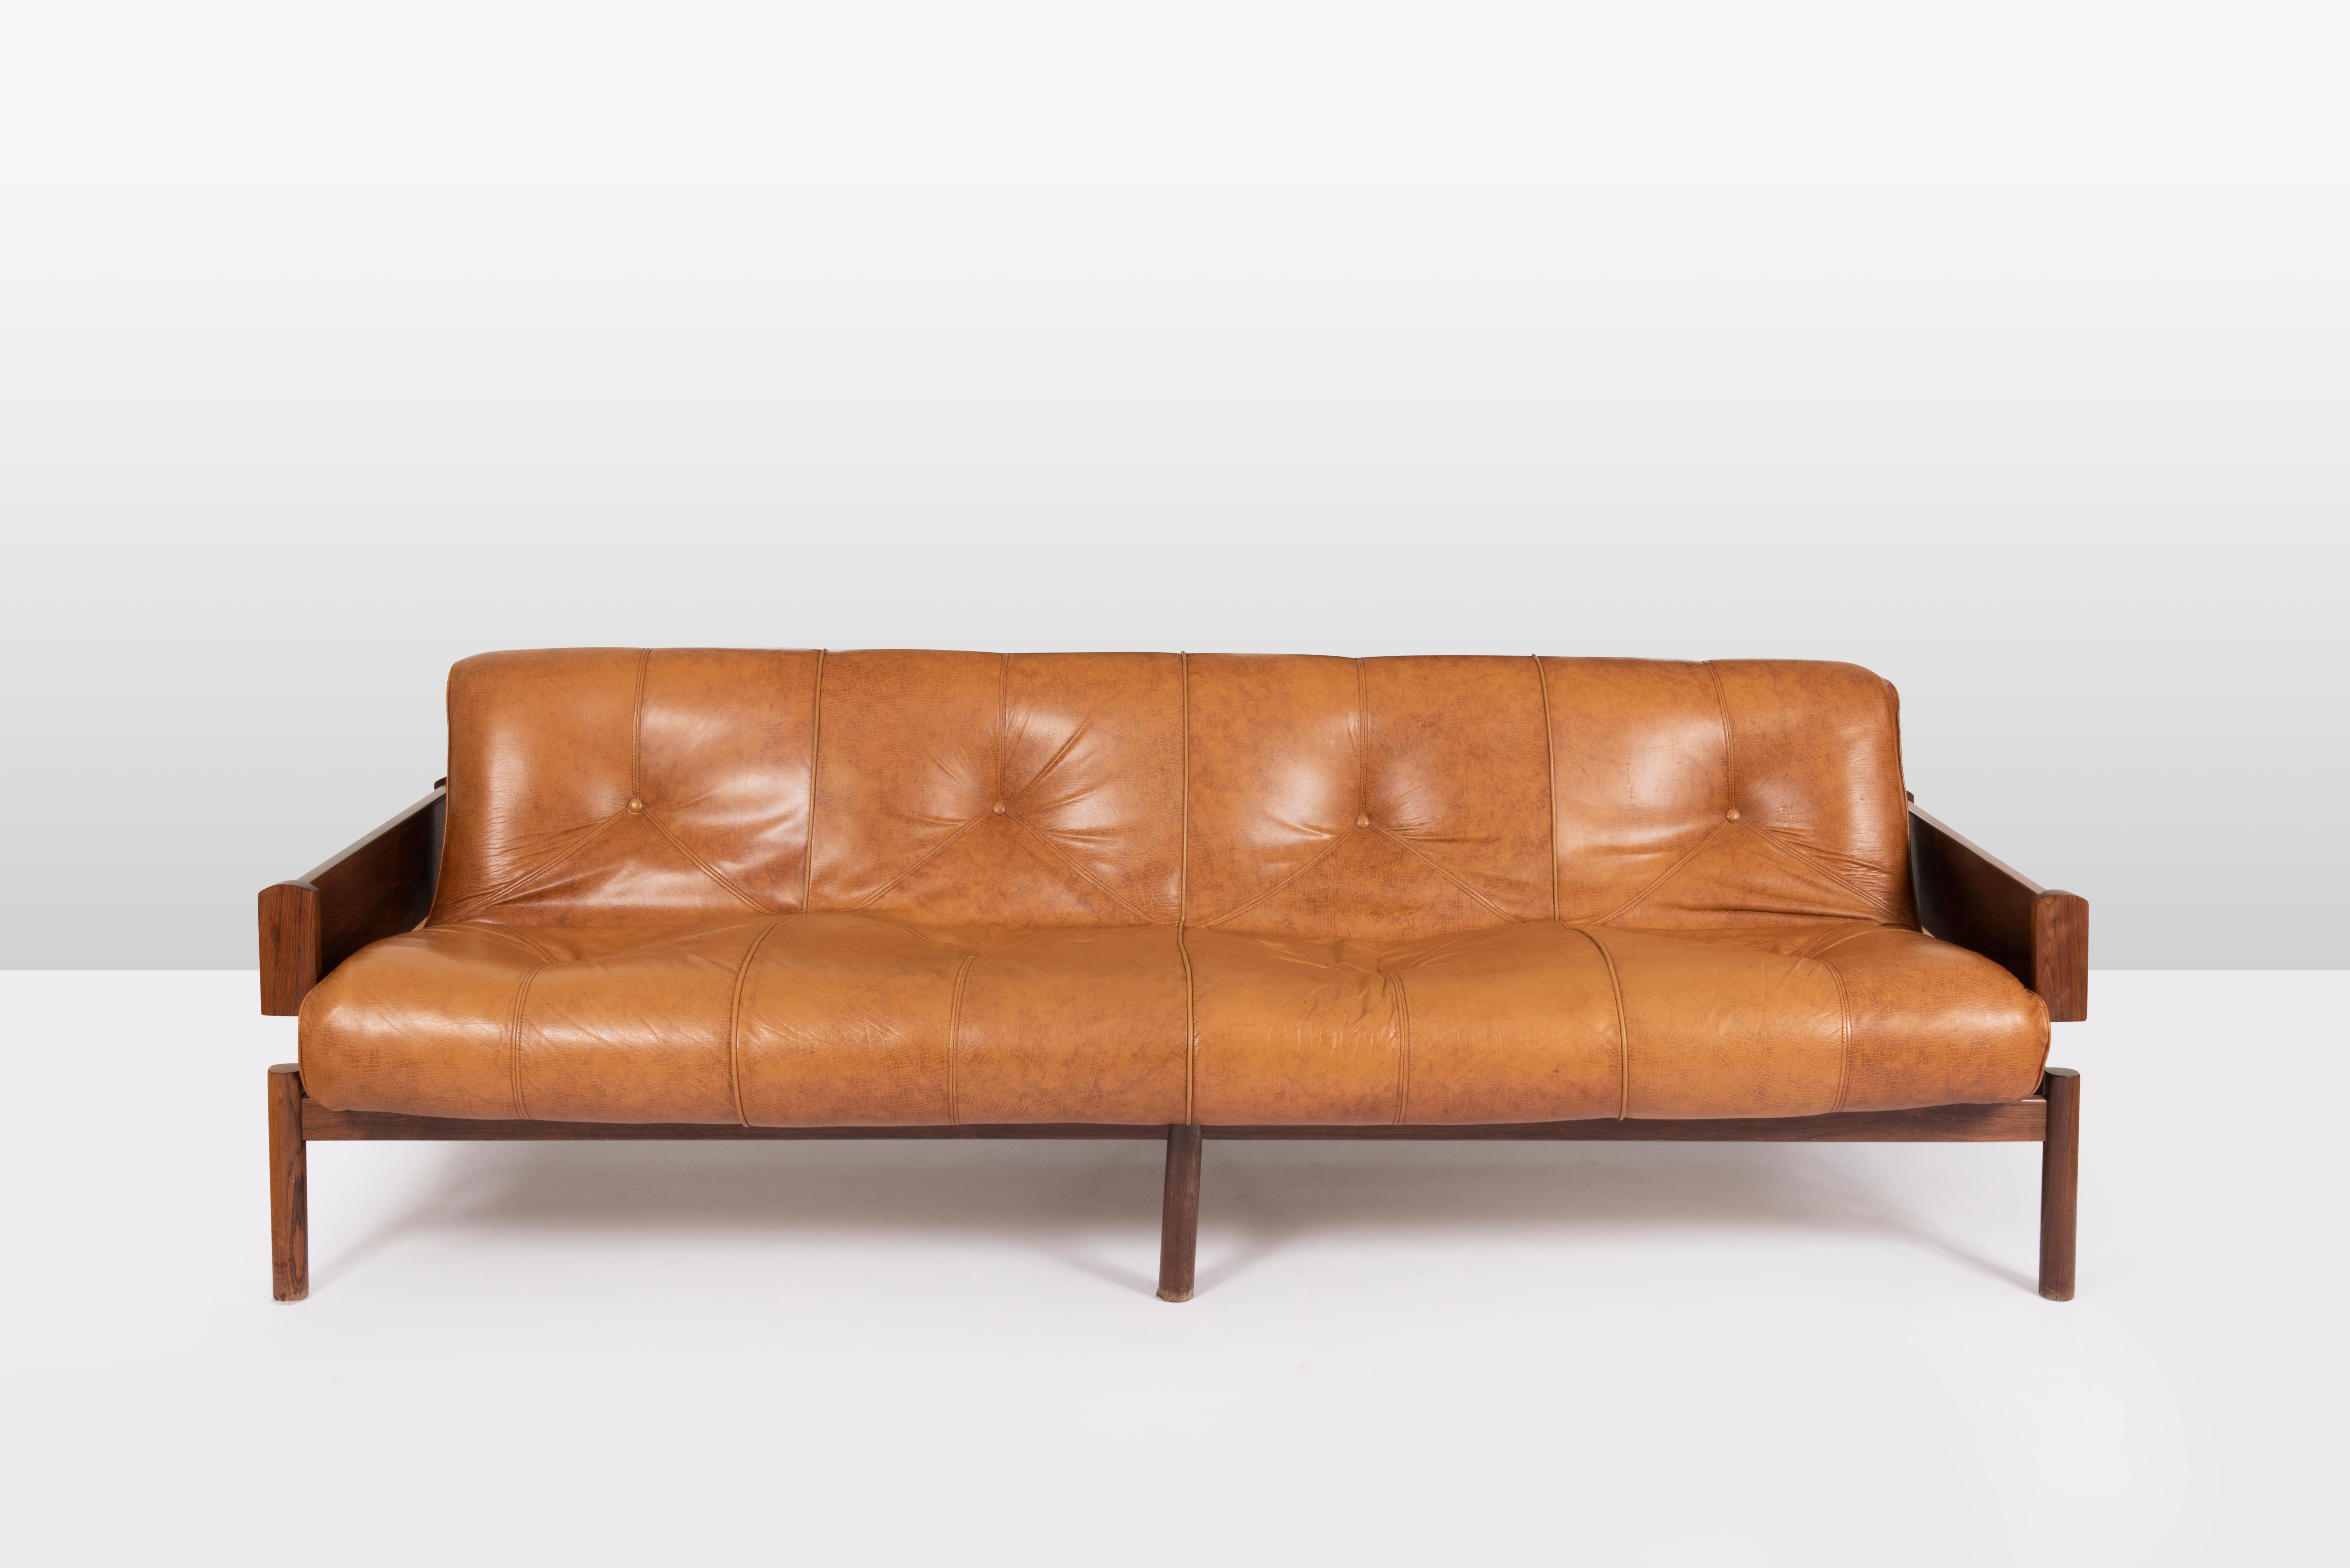 Brasilianisches modernes Sofa, Percival Lafer, 1960er Jahre (Kunstleder) im Angebot